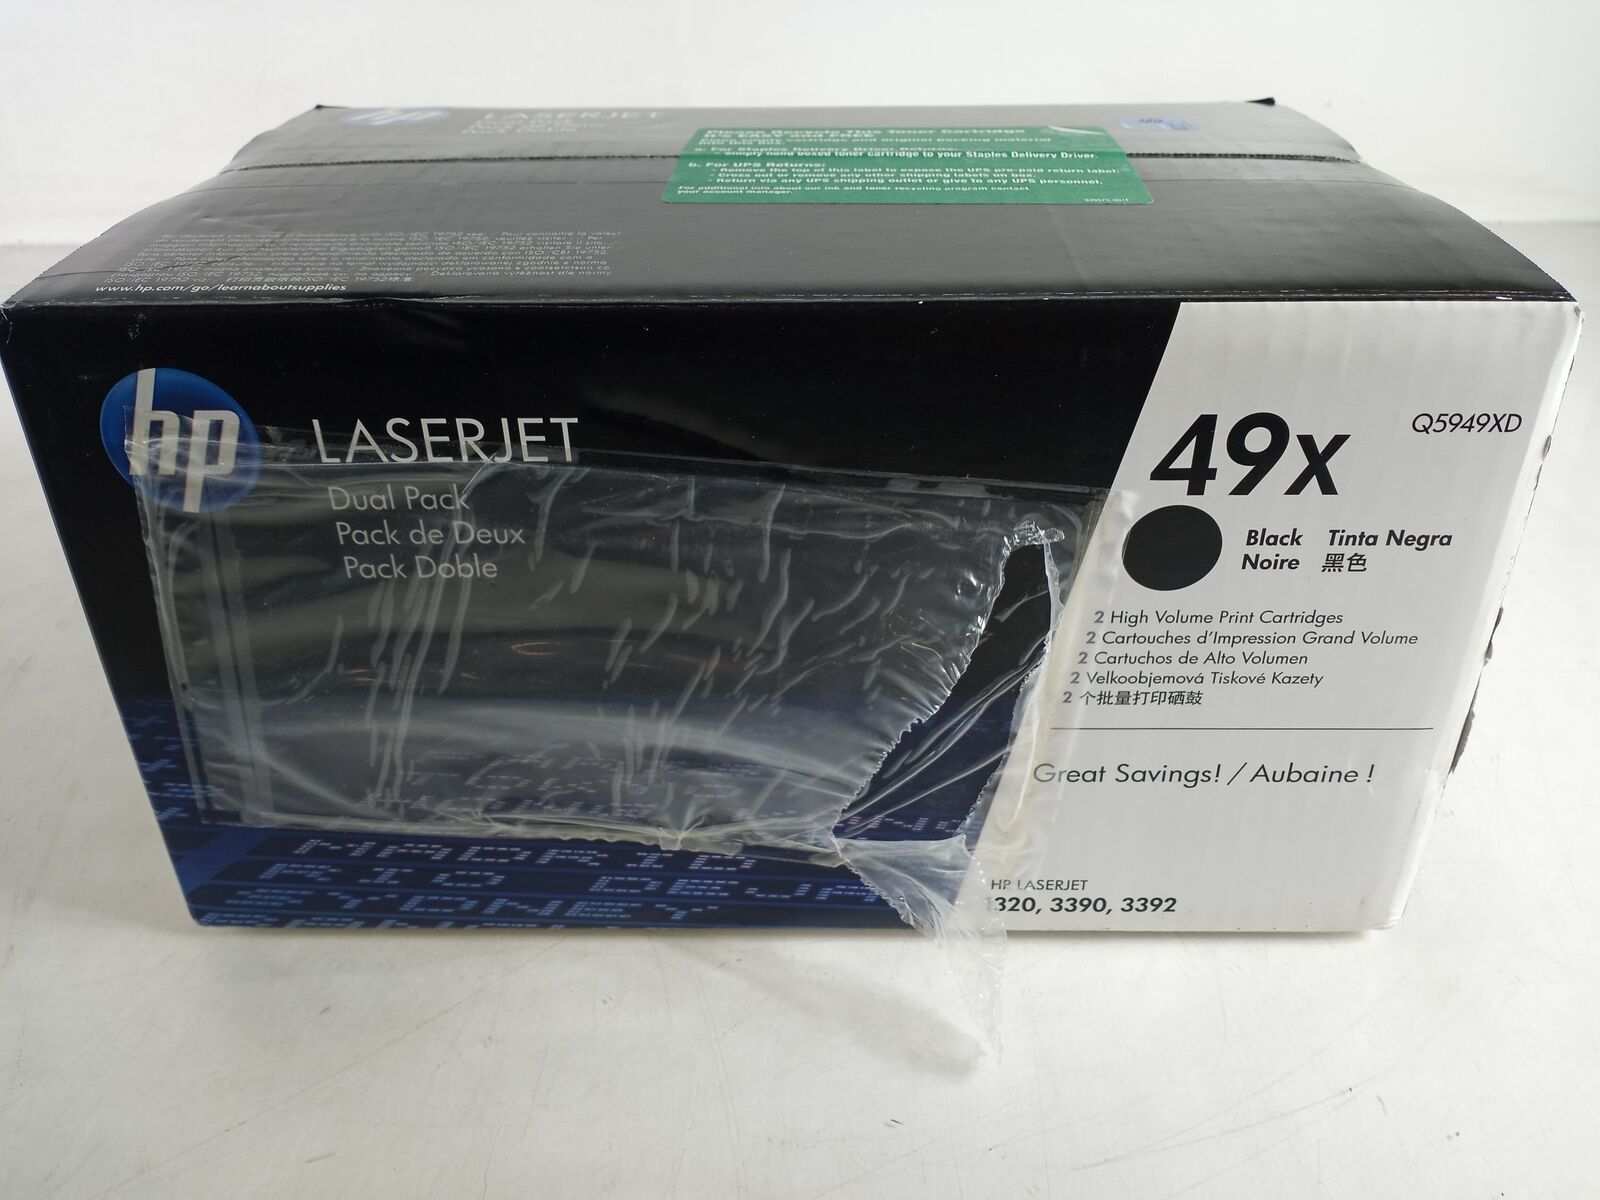 New HP Q5949XD 49X Black Toner Cartridge Dual Pack For LaserJet 1320, 3390, 3392